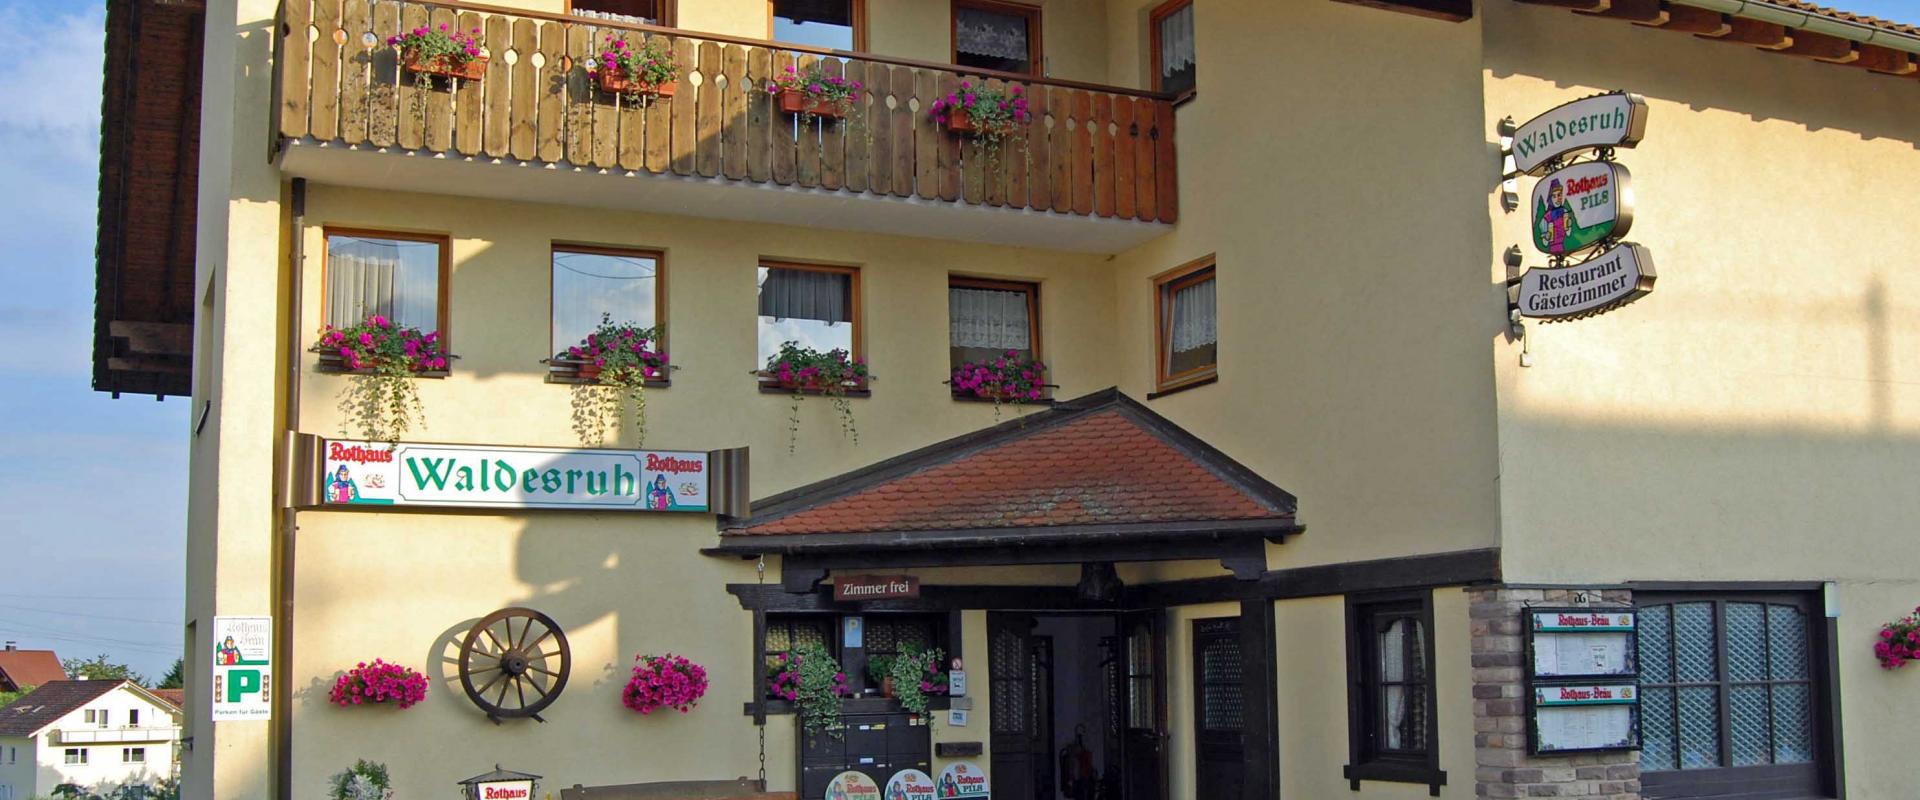 11416 Motorrad Hotel Waldesruh im Schwarzwald.jpeg